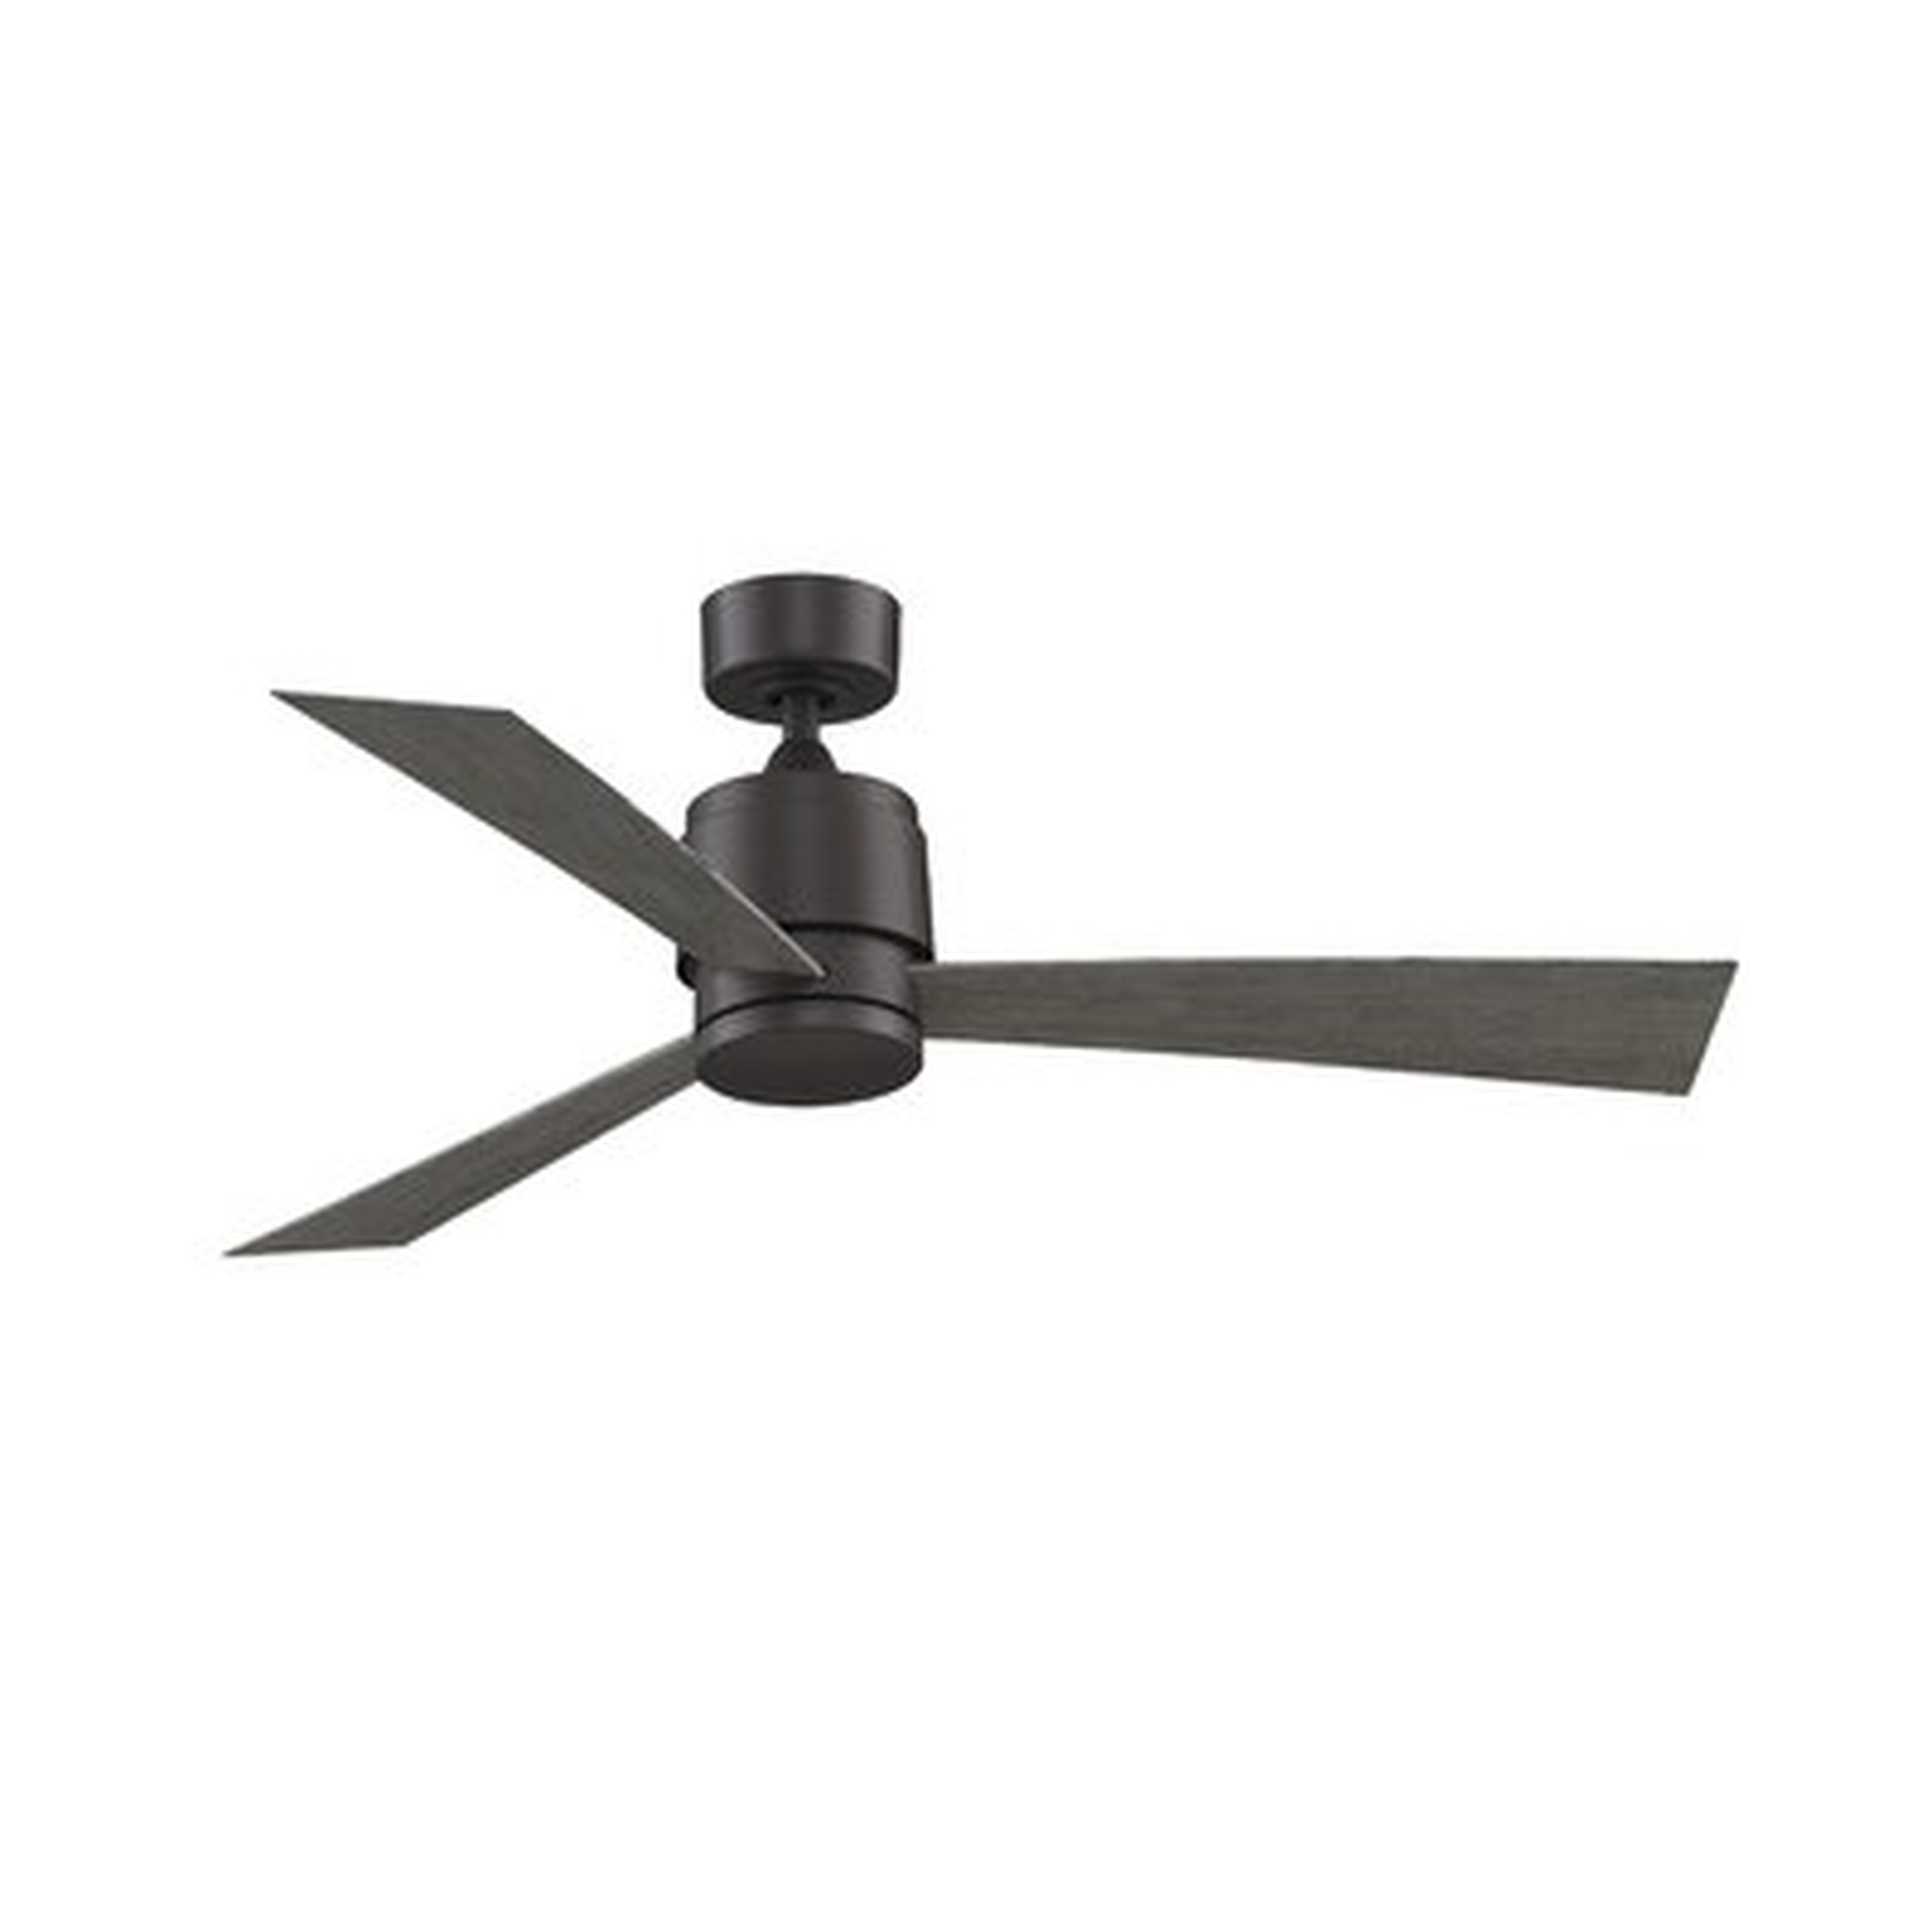 Zonix Wet Custom Outdoor Standard Ceiling Fan Motor with Remote Control - Wayfair